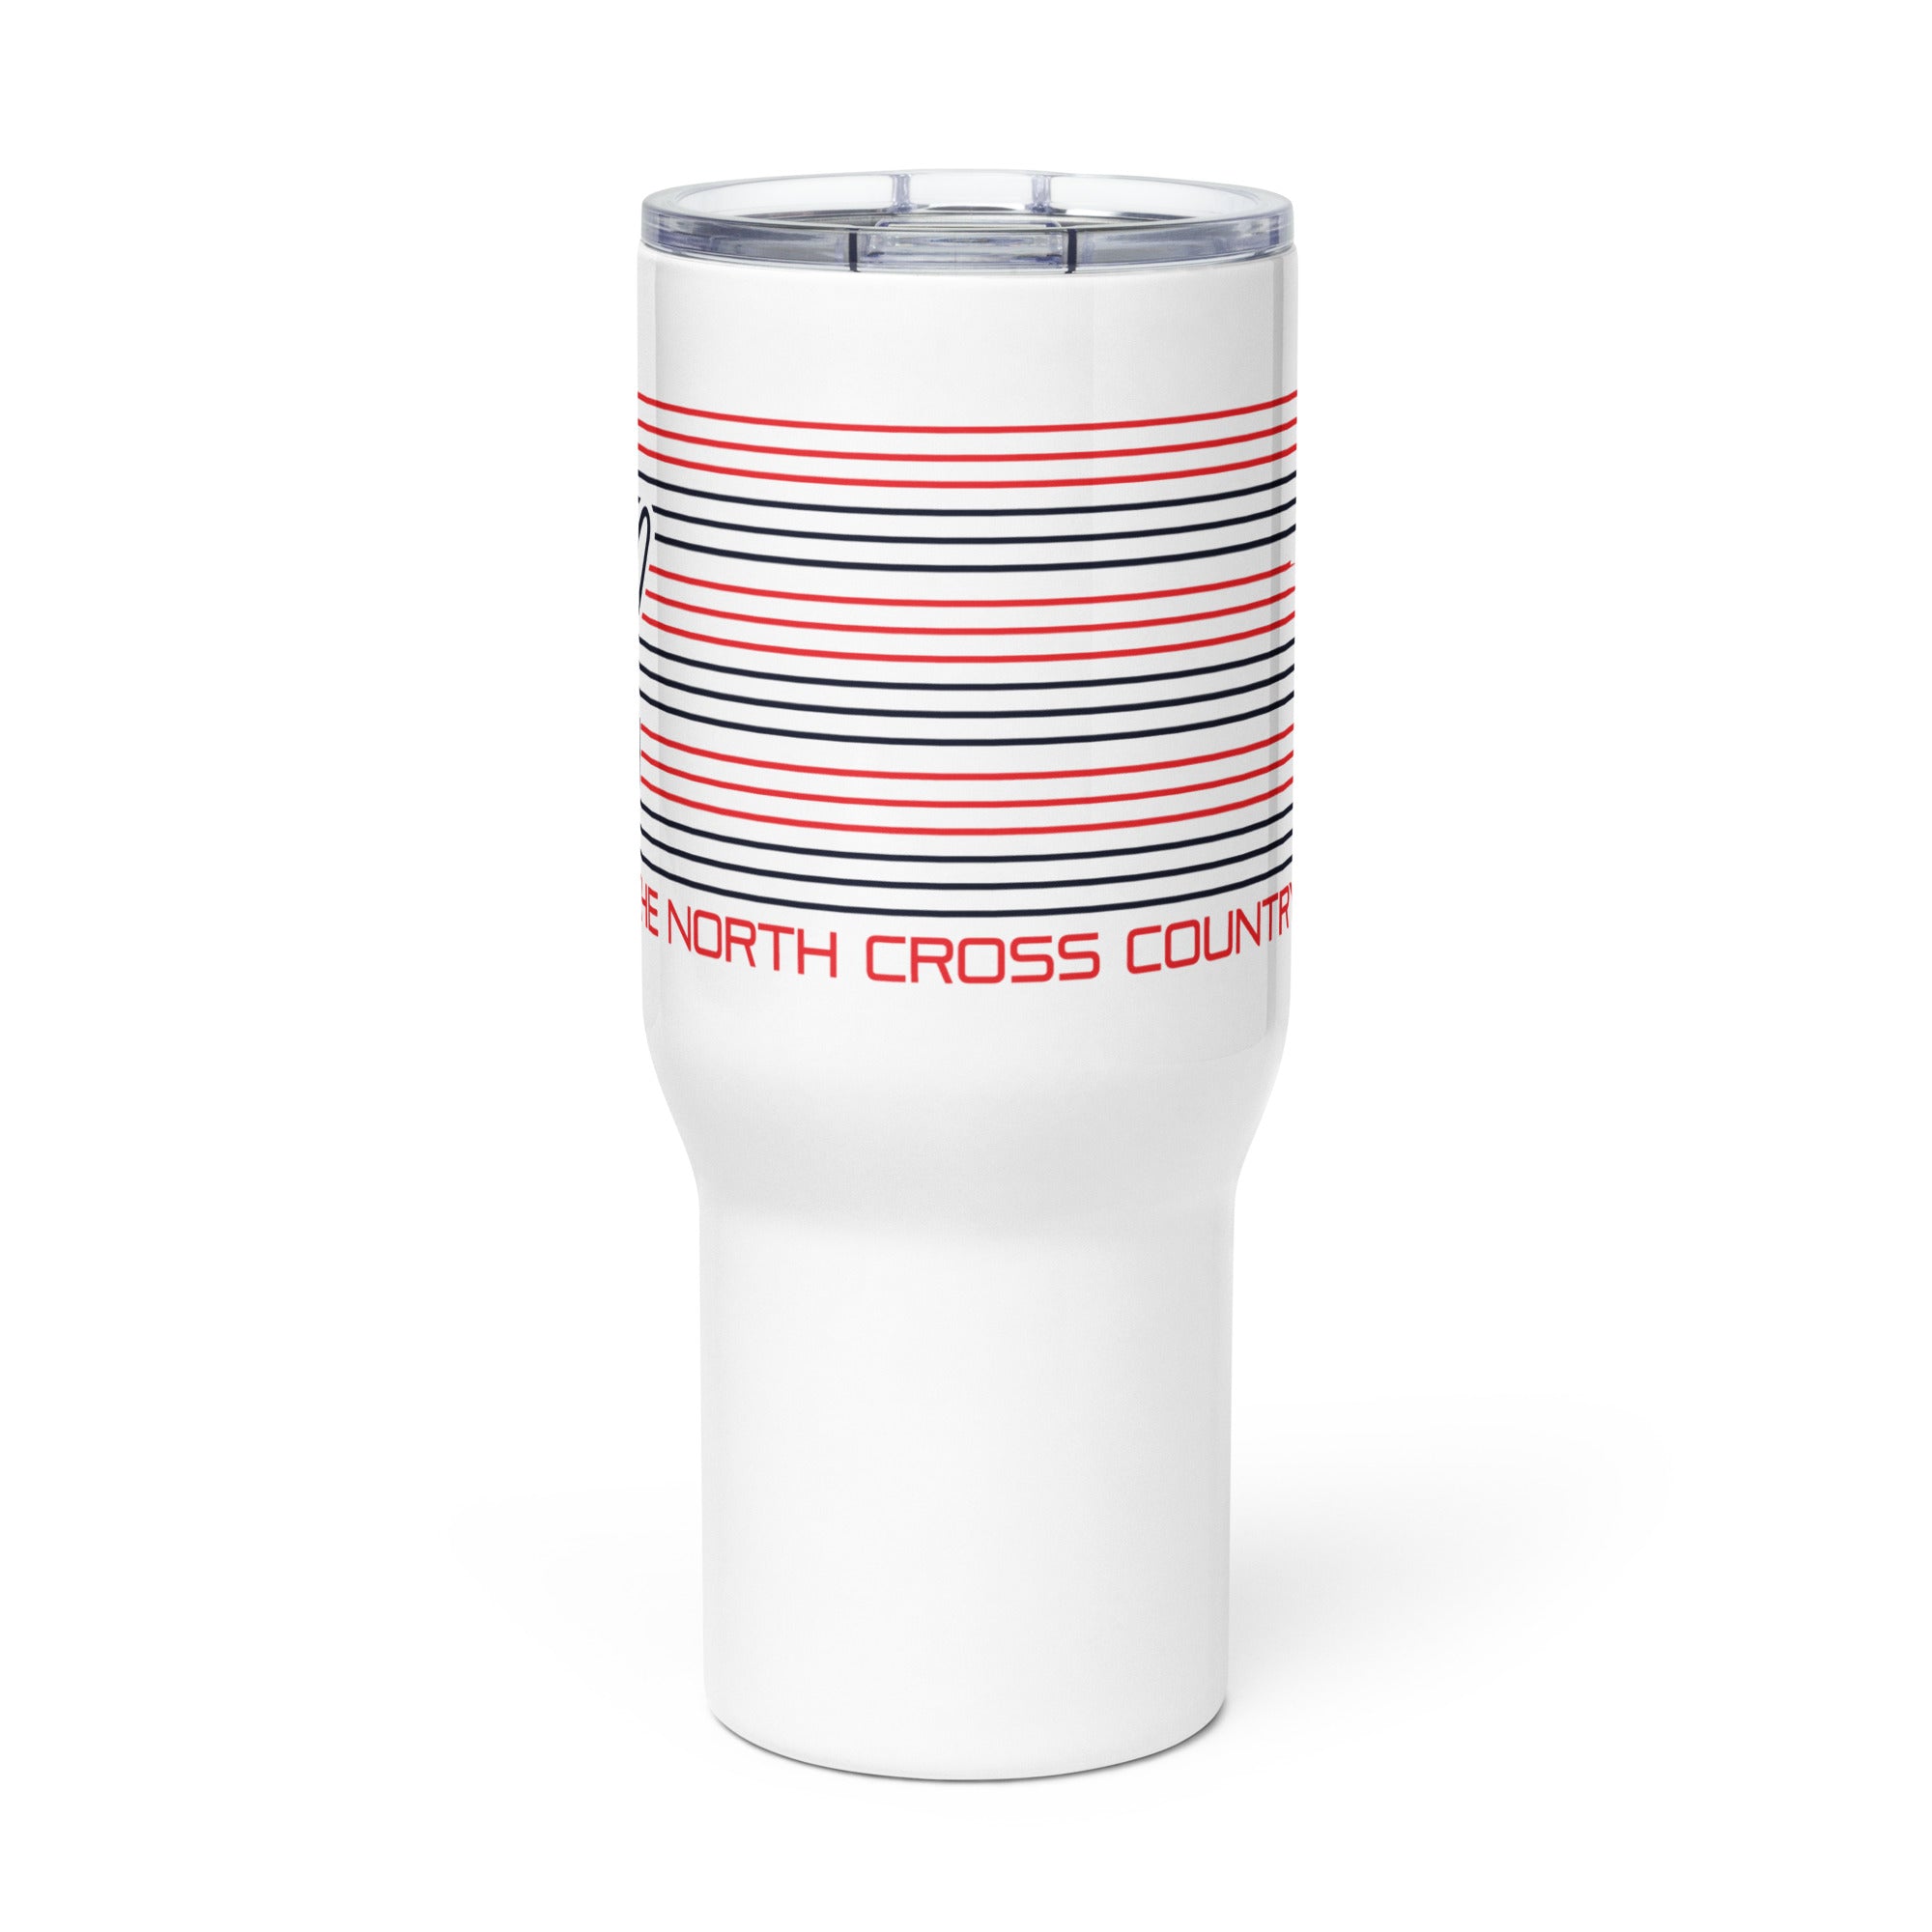 Olathe North Cross Country Travel mug with a handle